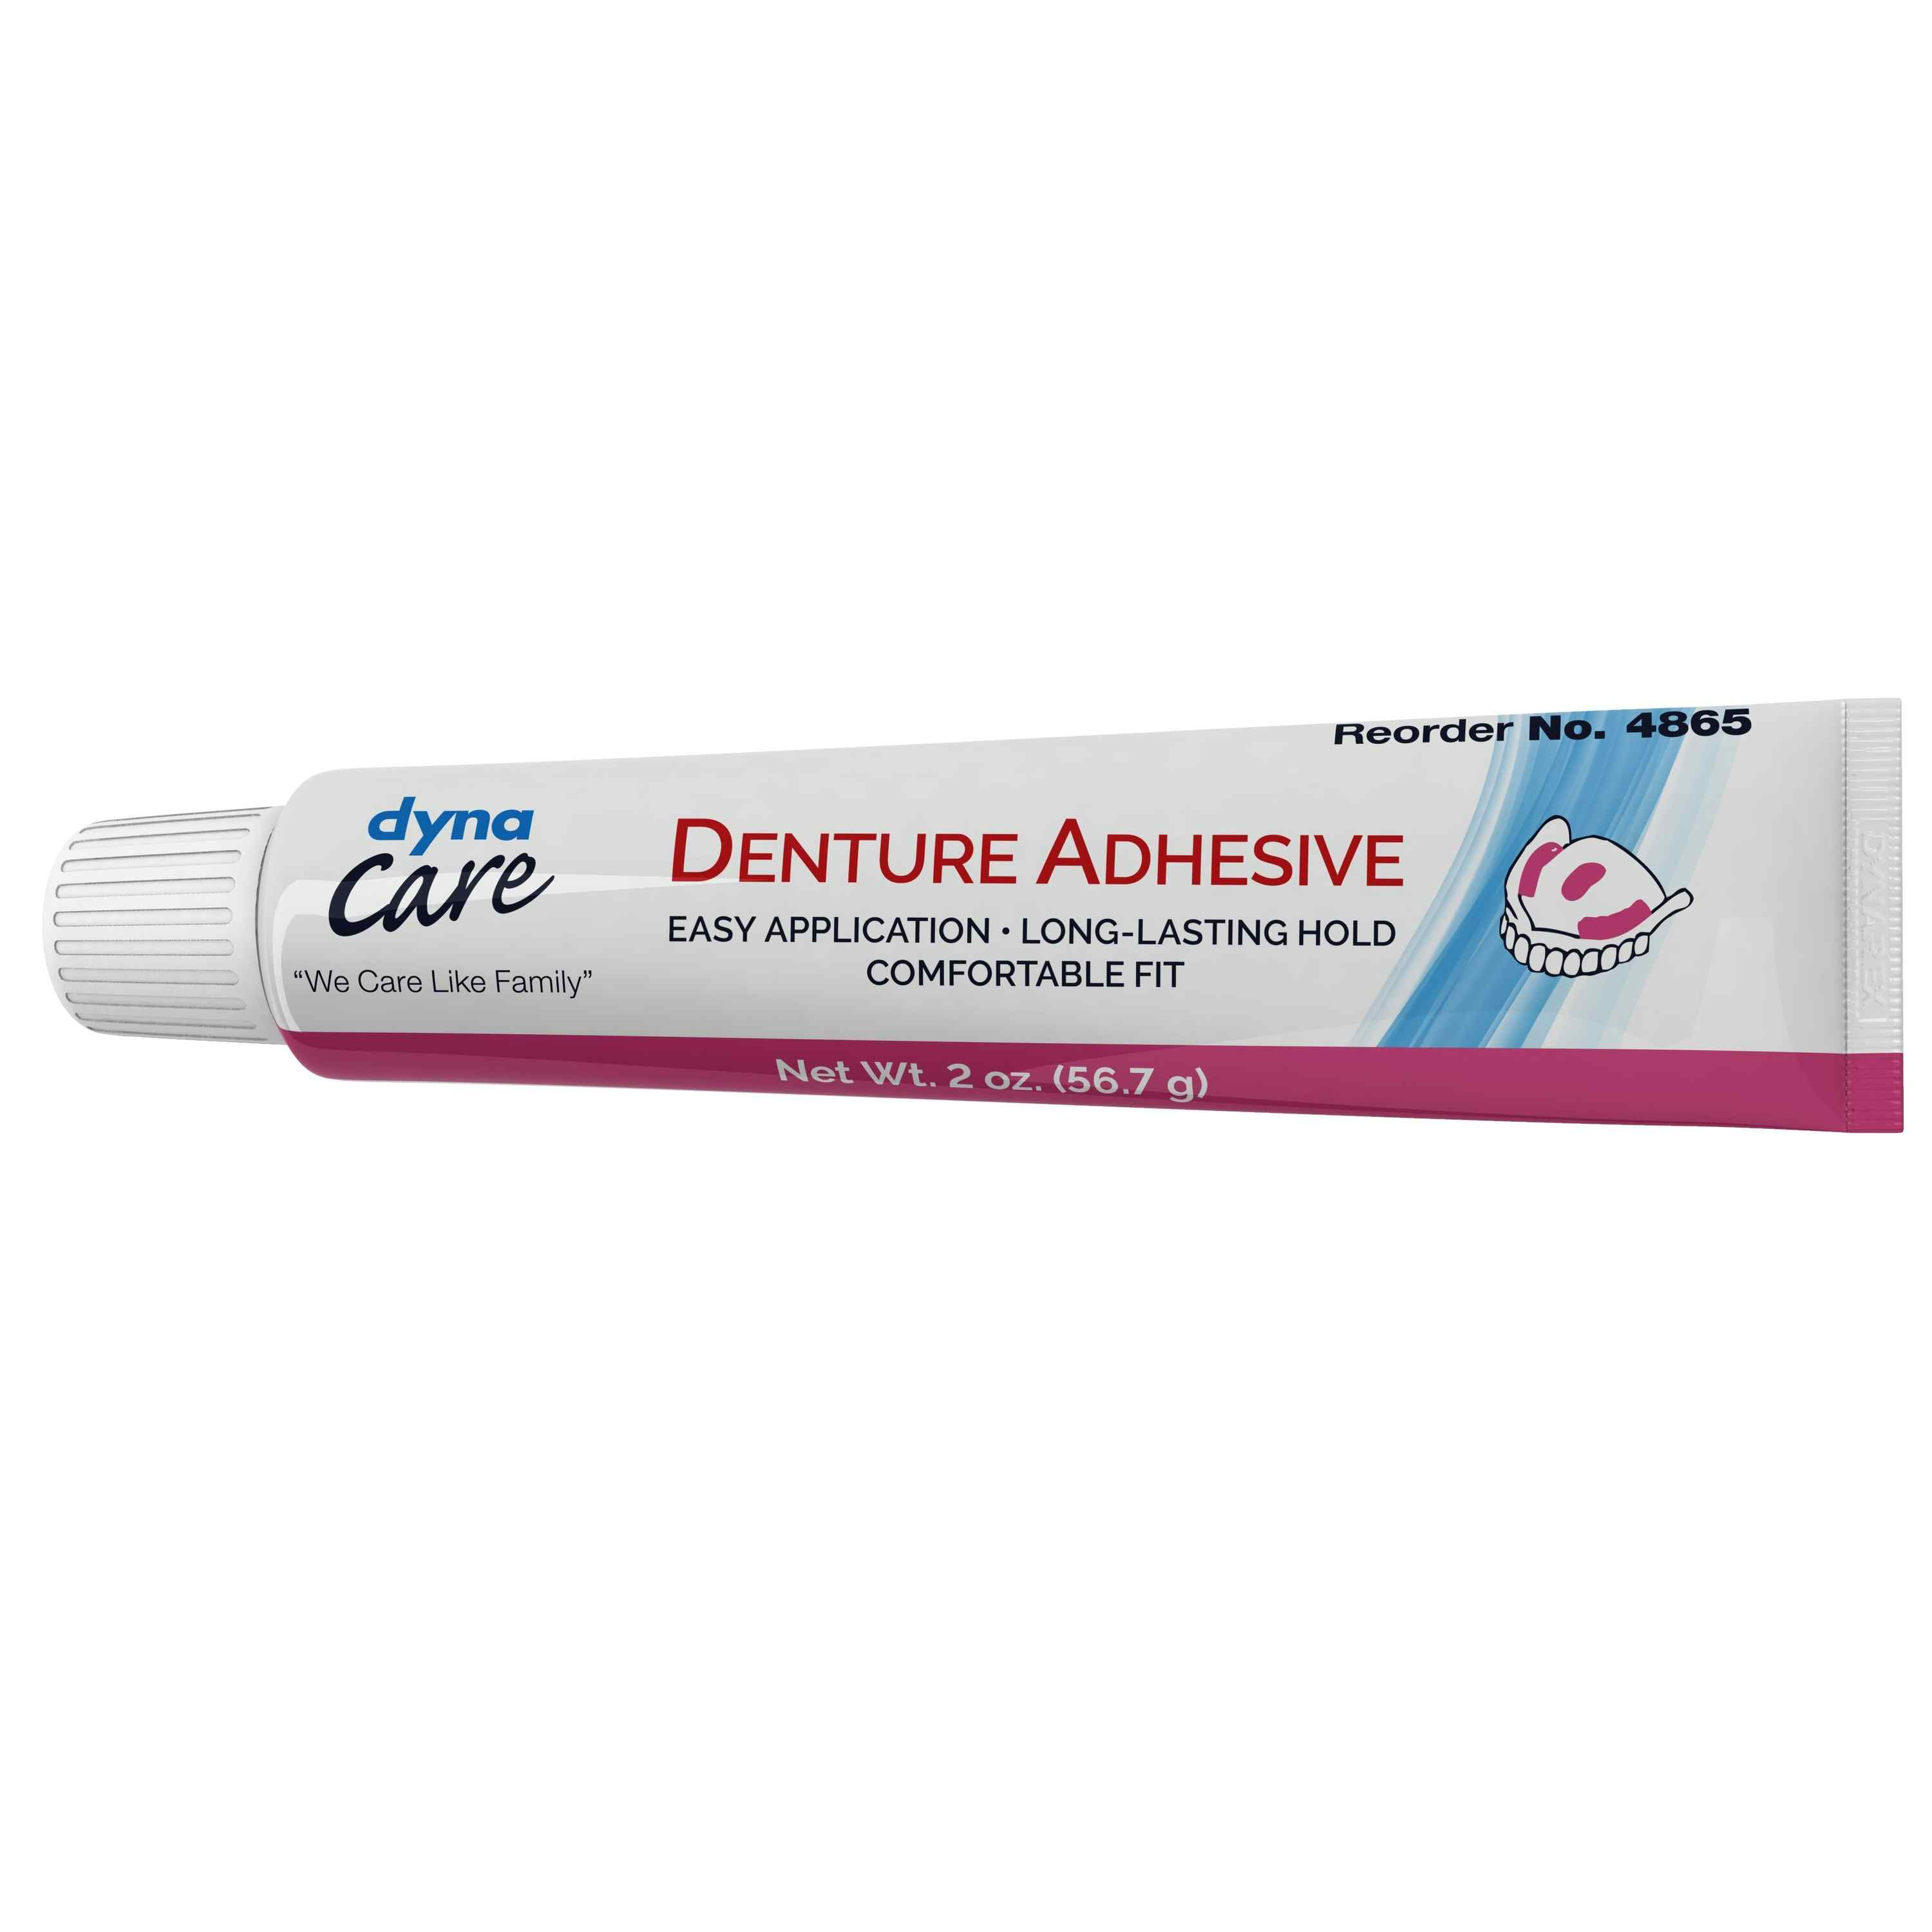 Dynarex DynaCare Denture Adhesive, 2 oz., 4865, 1 Each